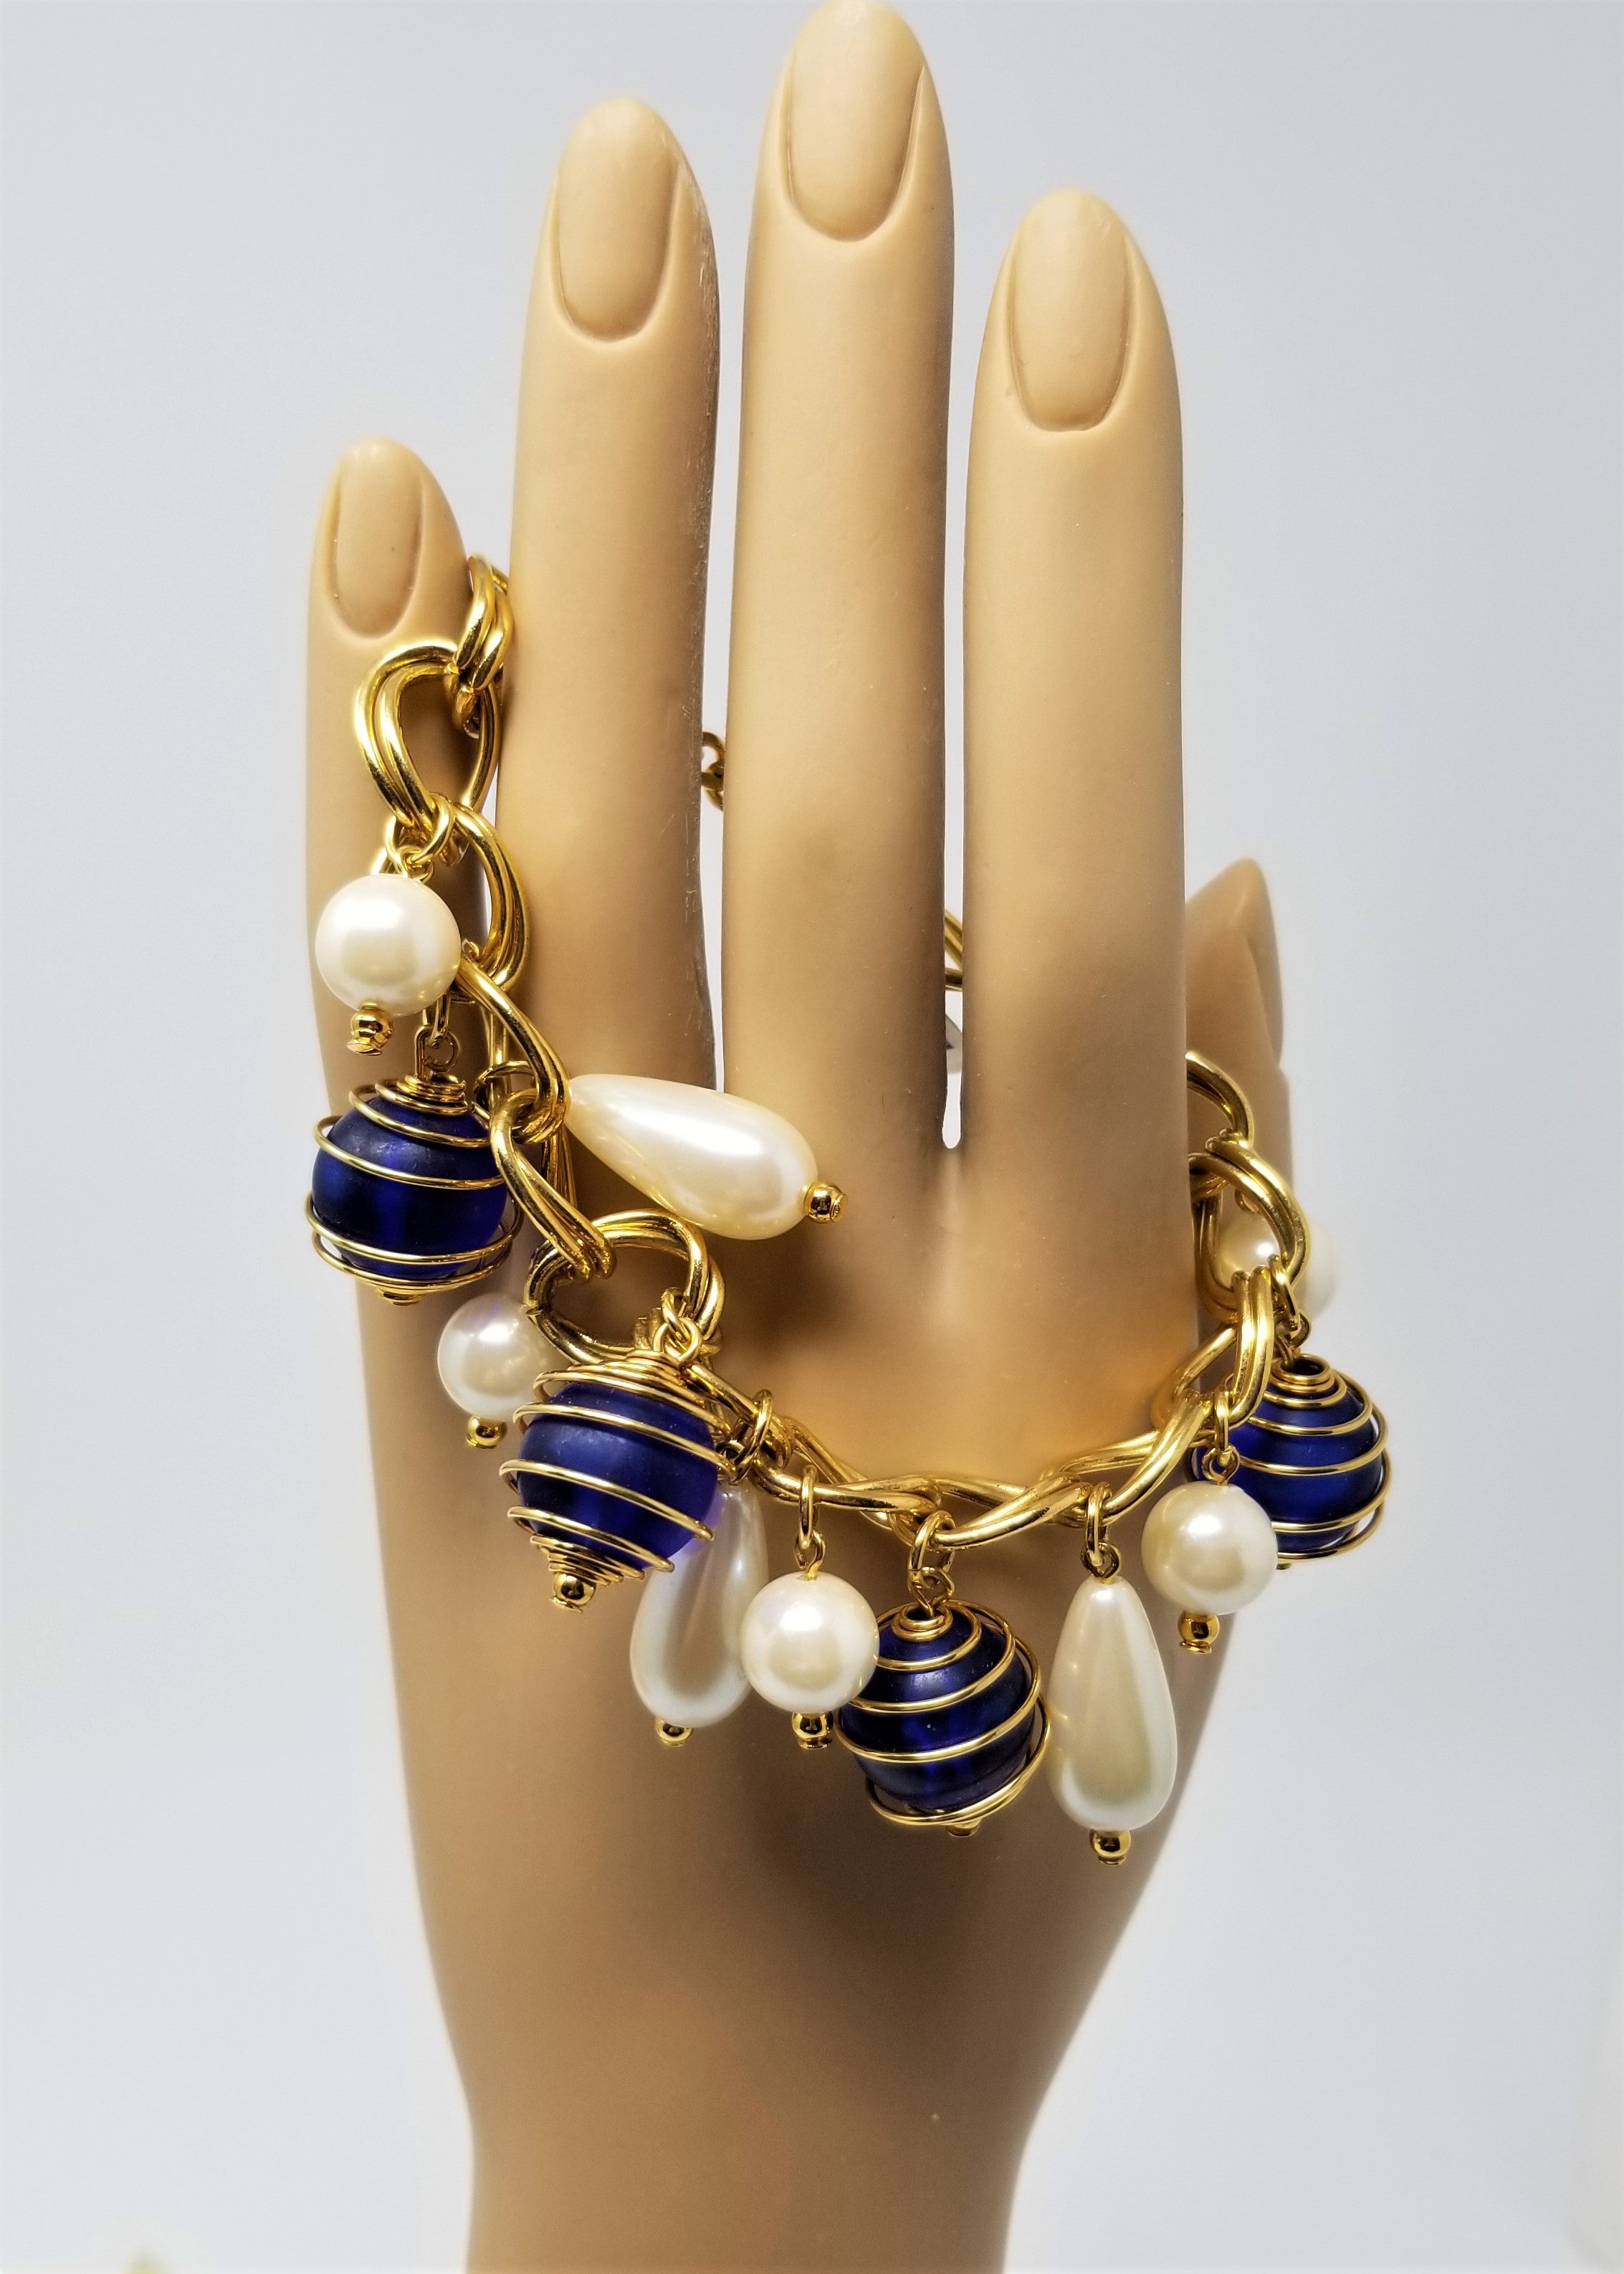 Vintage Charm Bracelet with Pearls & Cobalt Beads